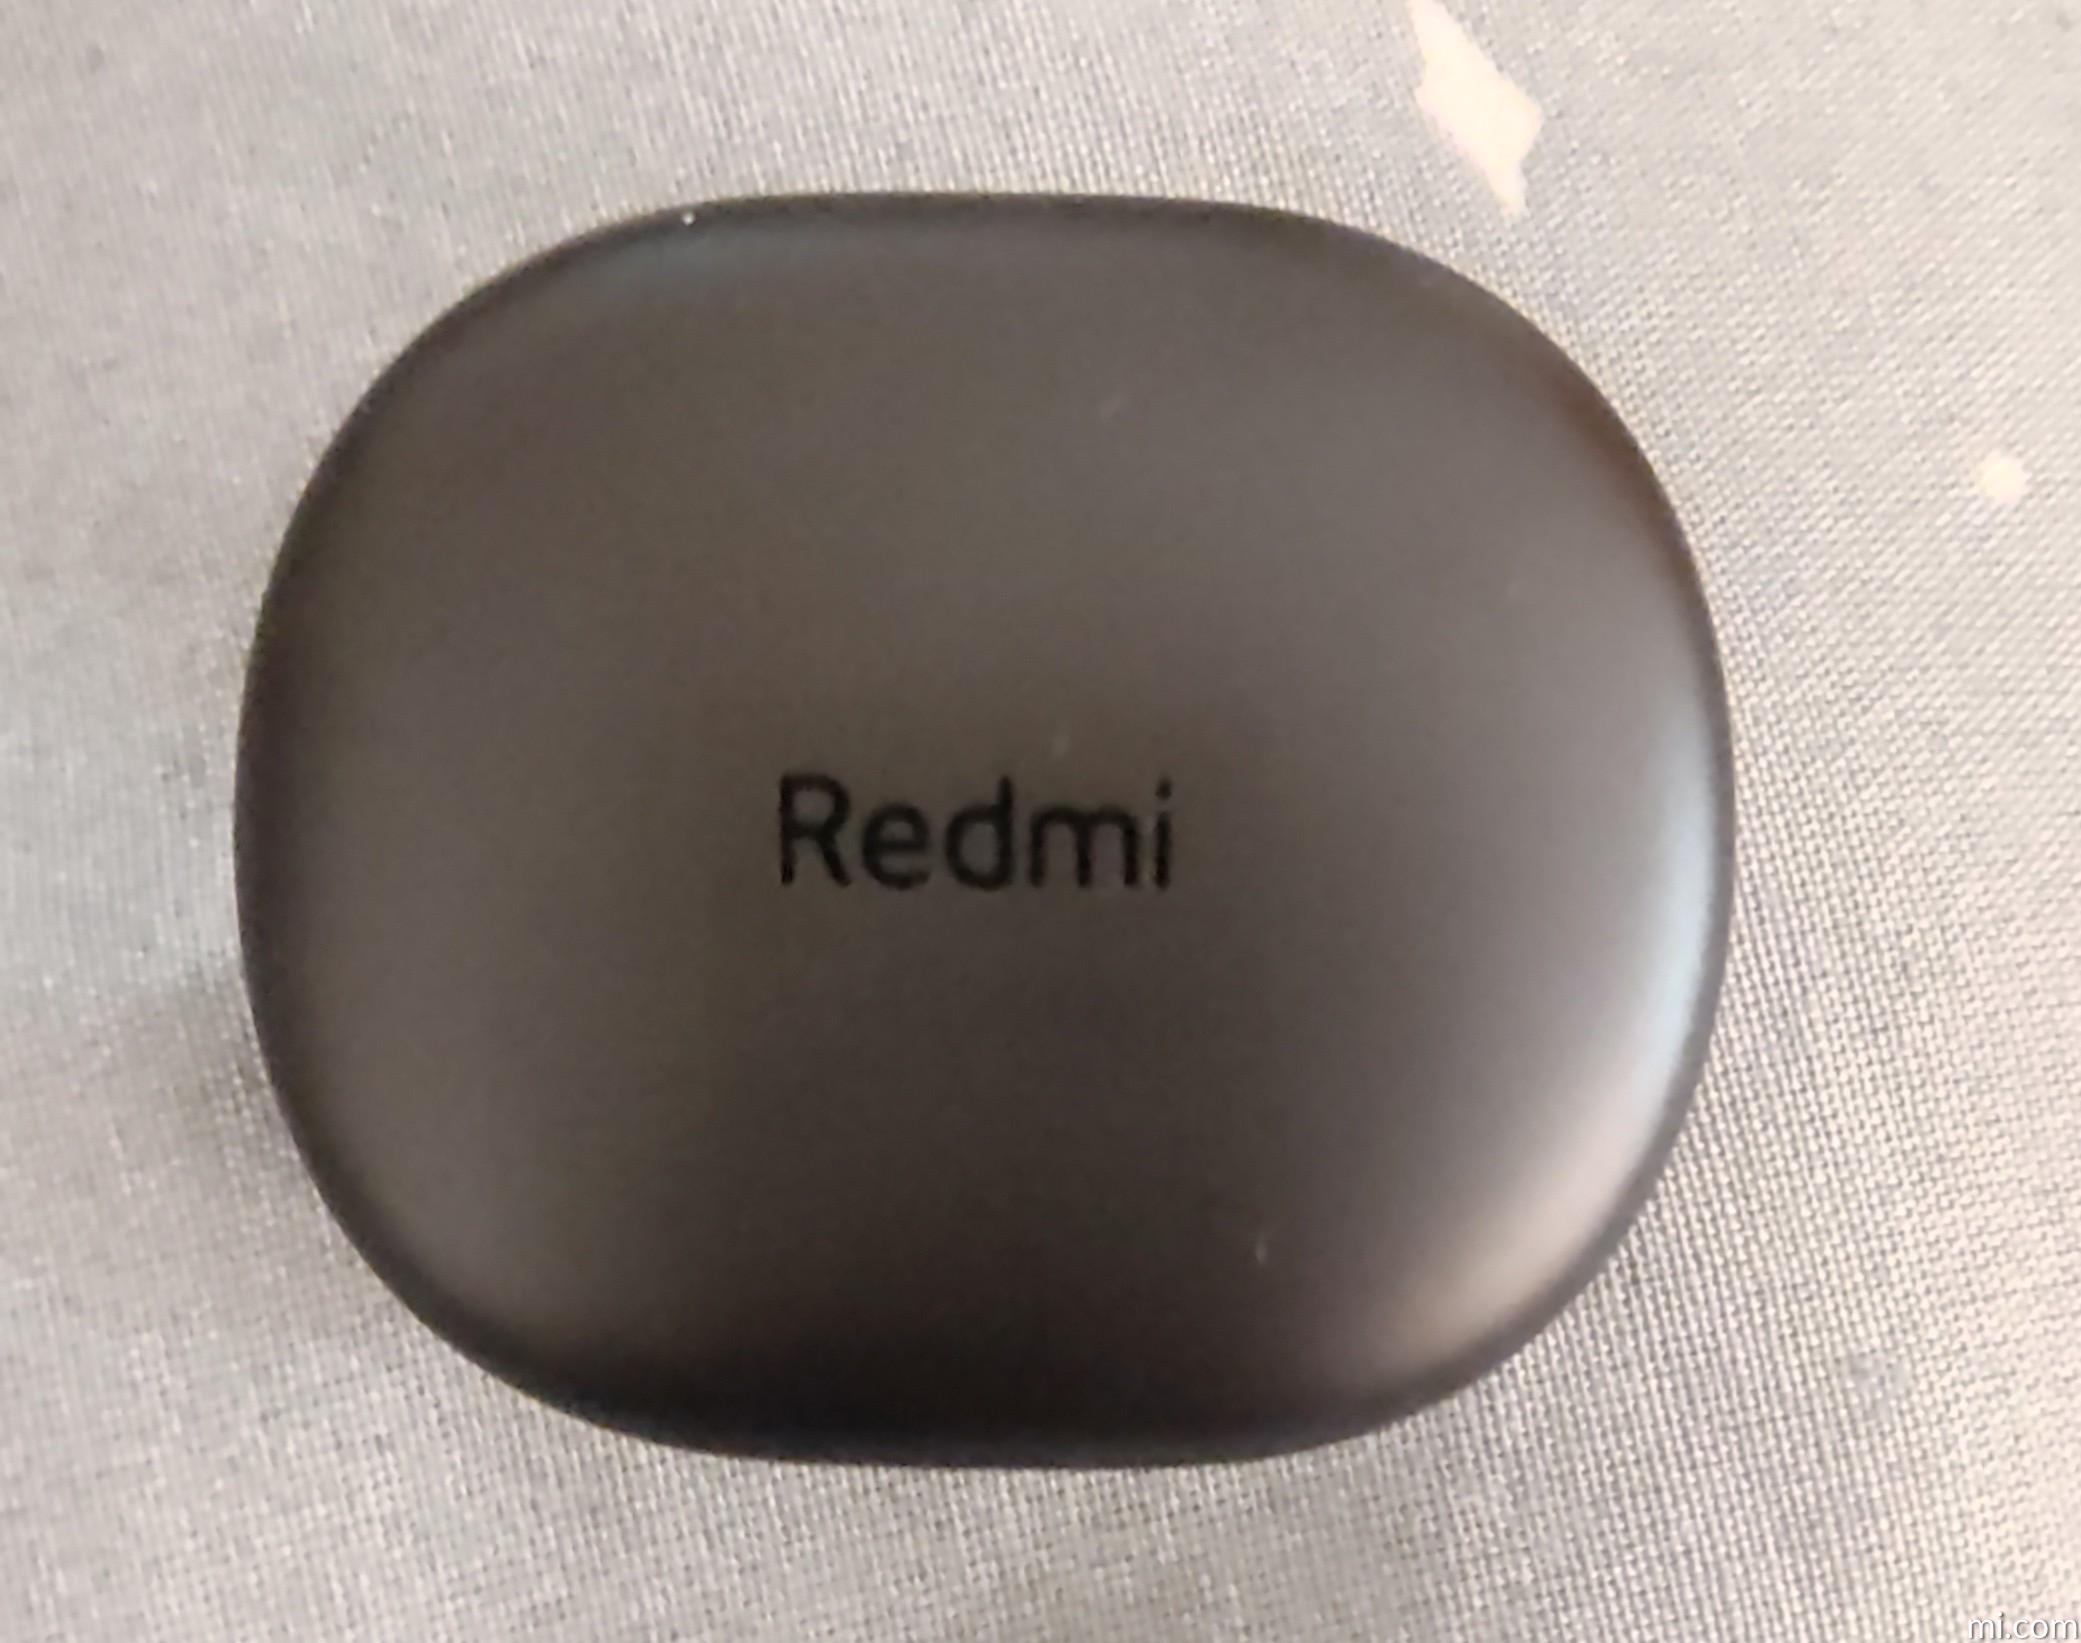 REDMI BUDS 4 LITE - Xiaomi Medellin